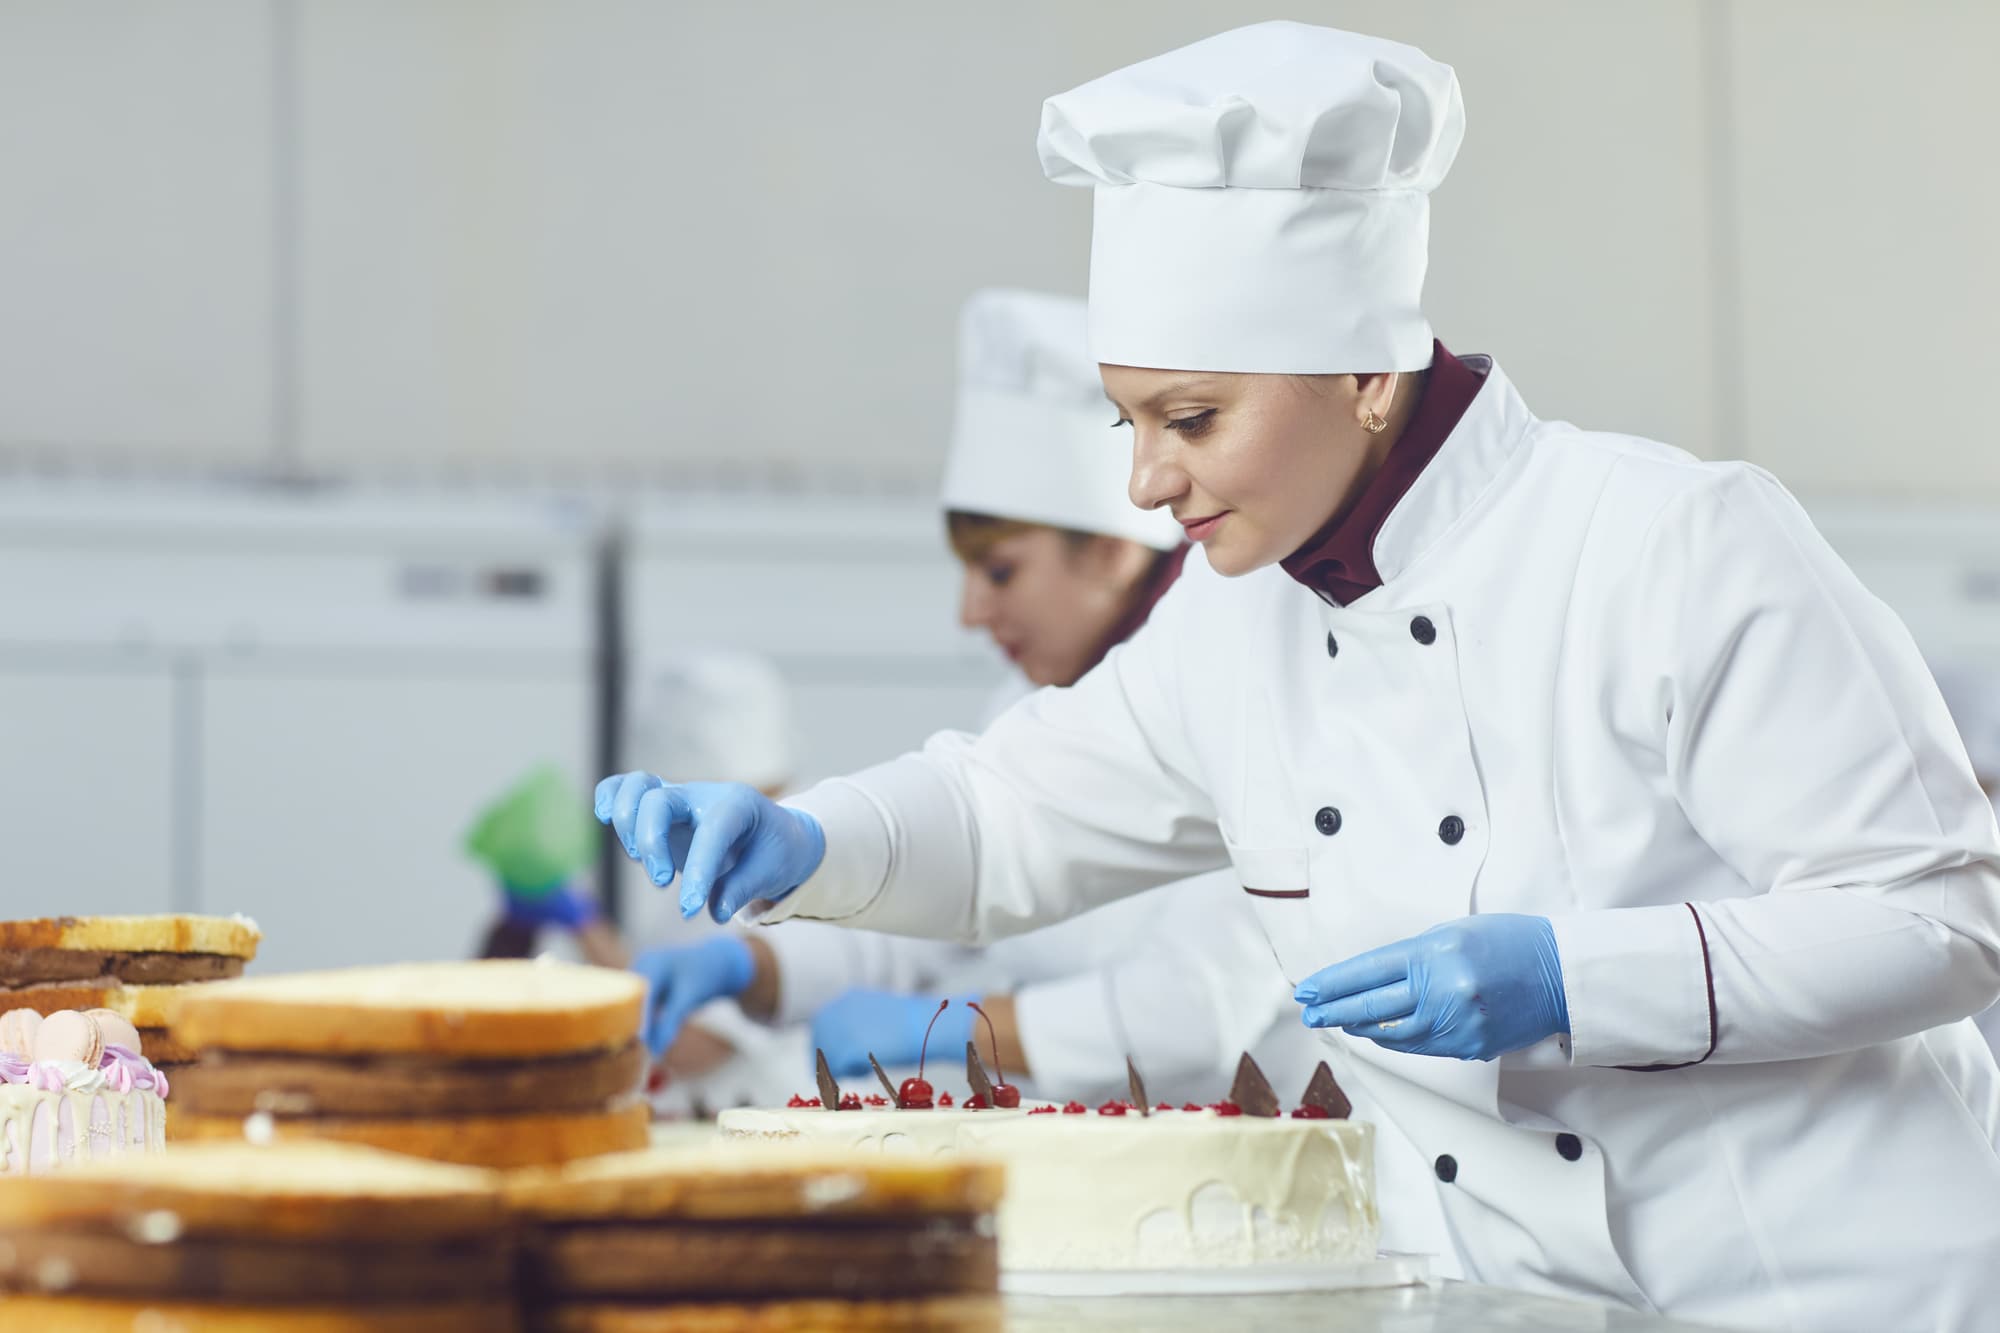 How to setup a bakery business in Dubai